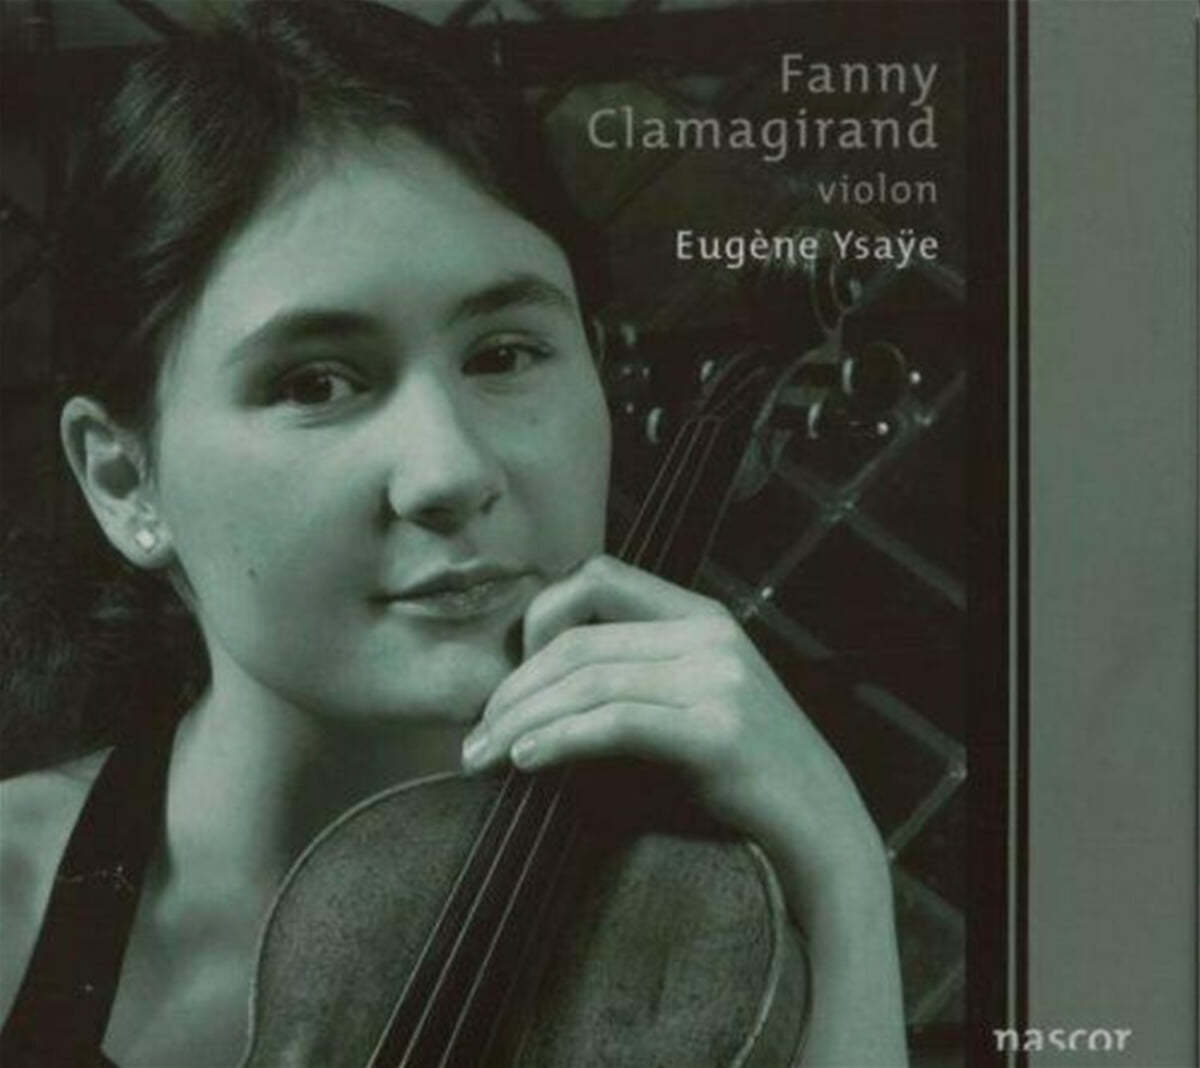 Fanny Clamagirand 이자이: 무반주 바이올린 소나타 (Eugene Ysaye: Violin Sonatas Op.27) 